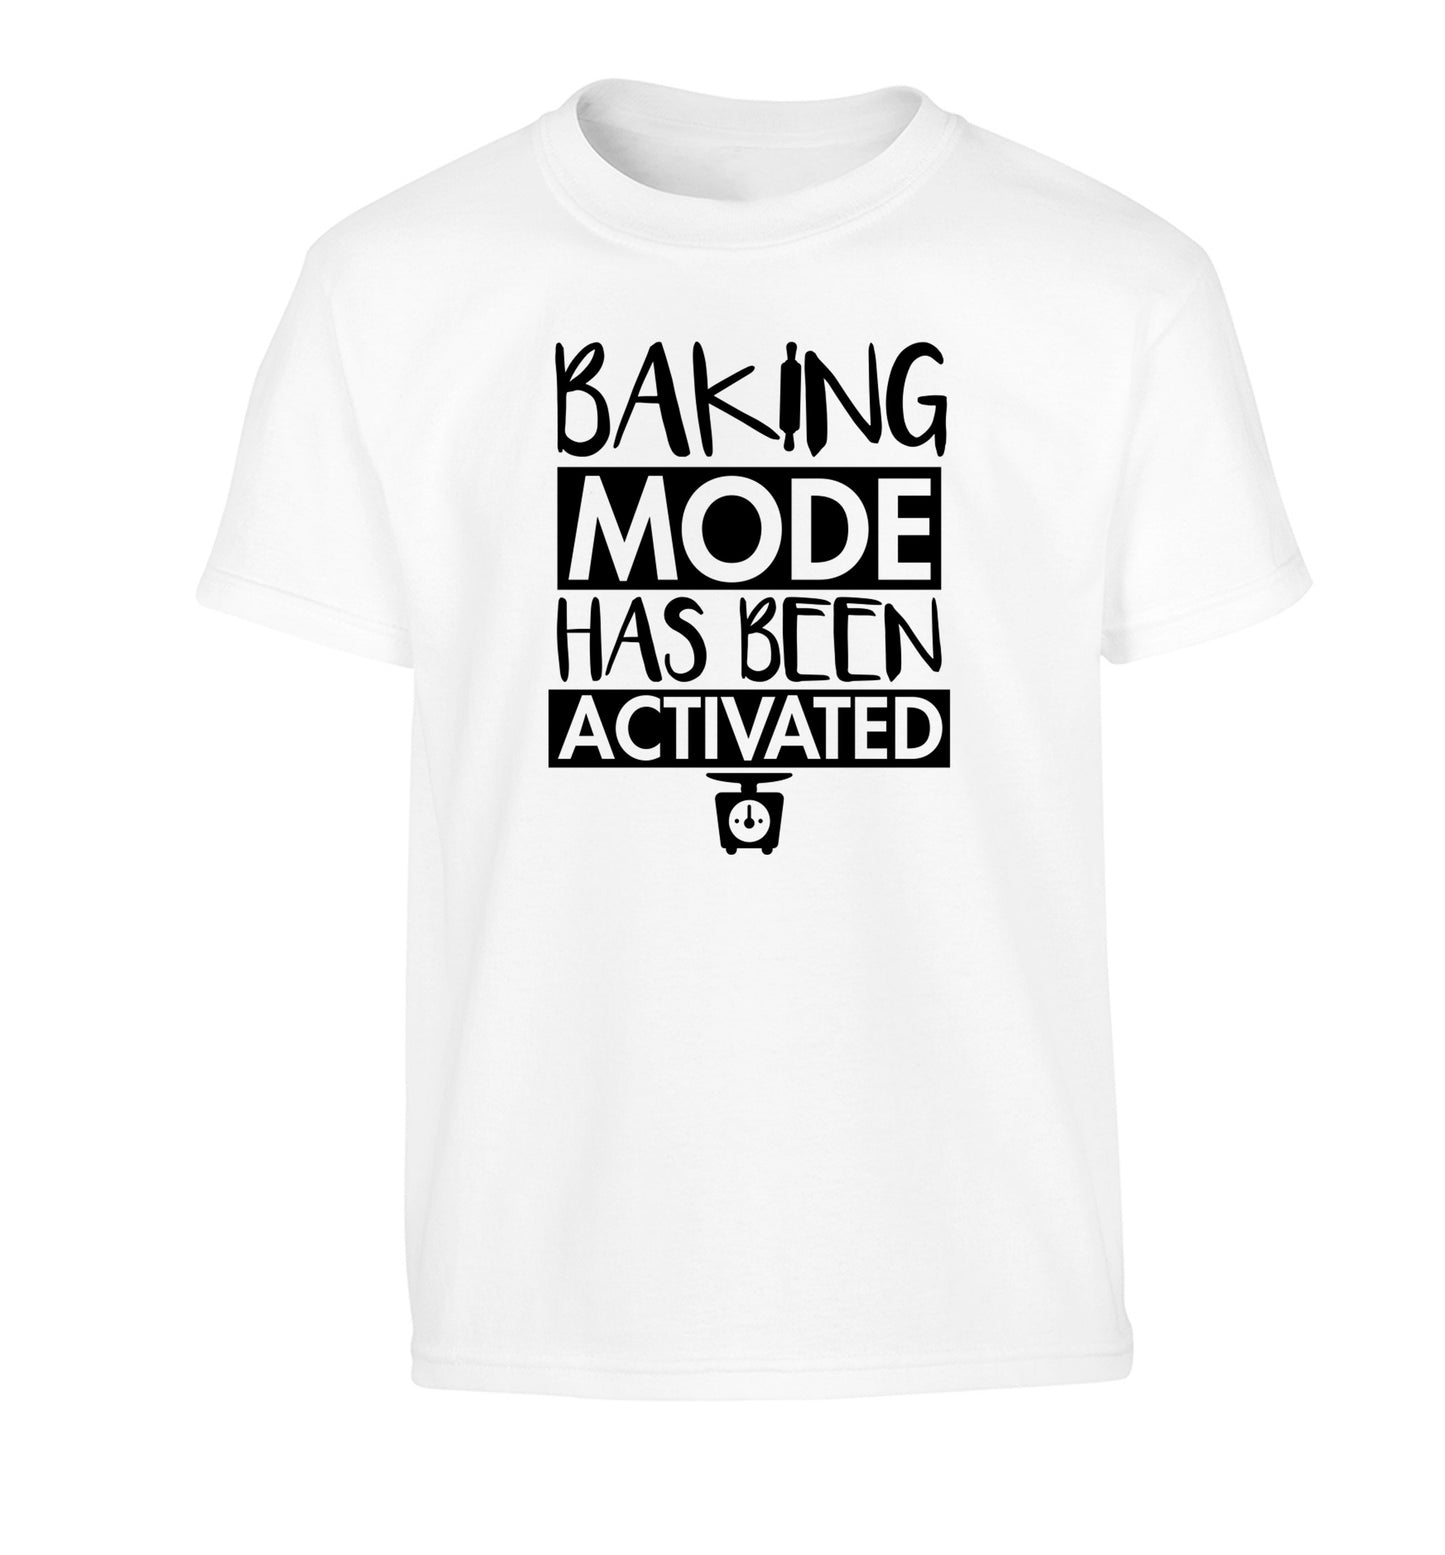 Baking mode has been activated Children's white Tshirt 12-14 Years